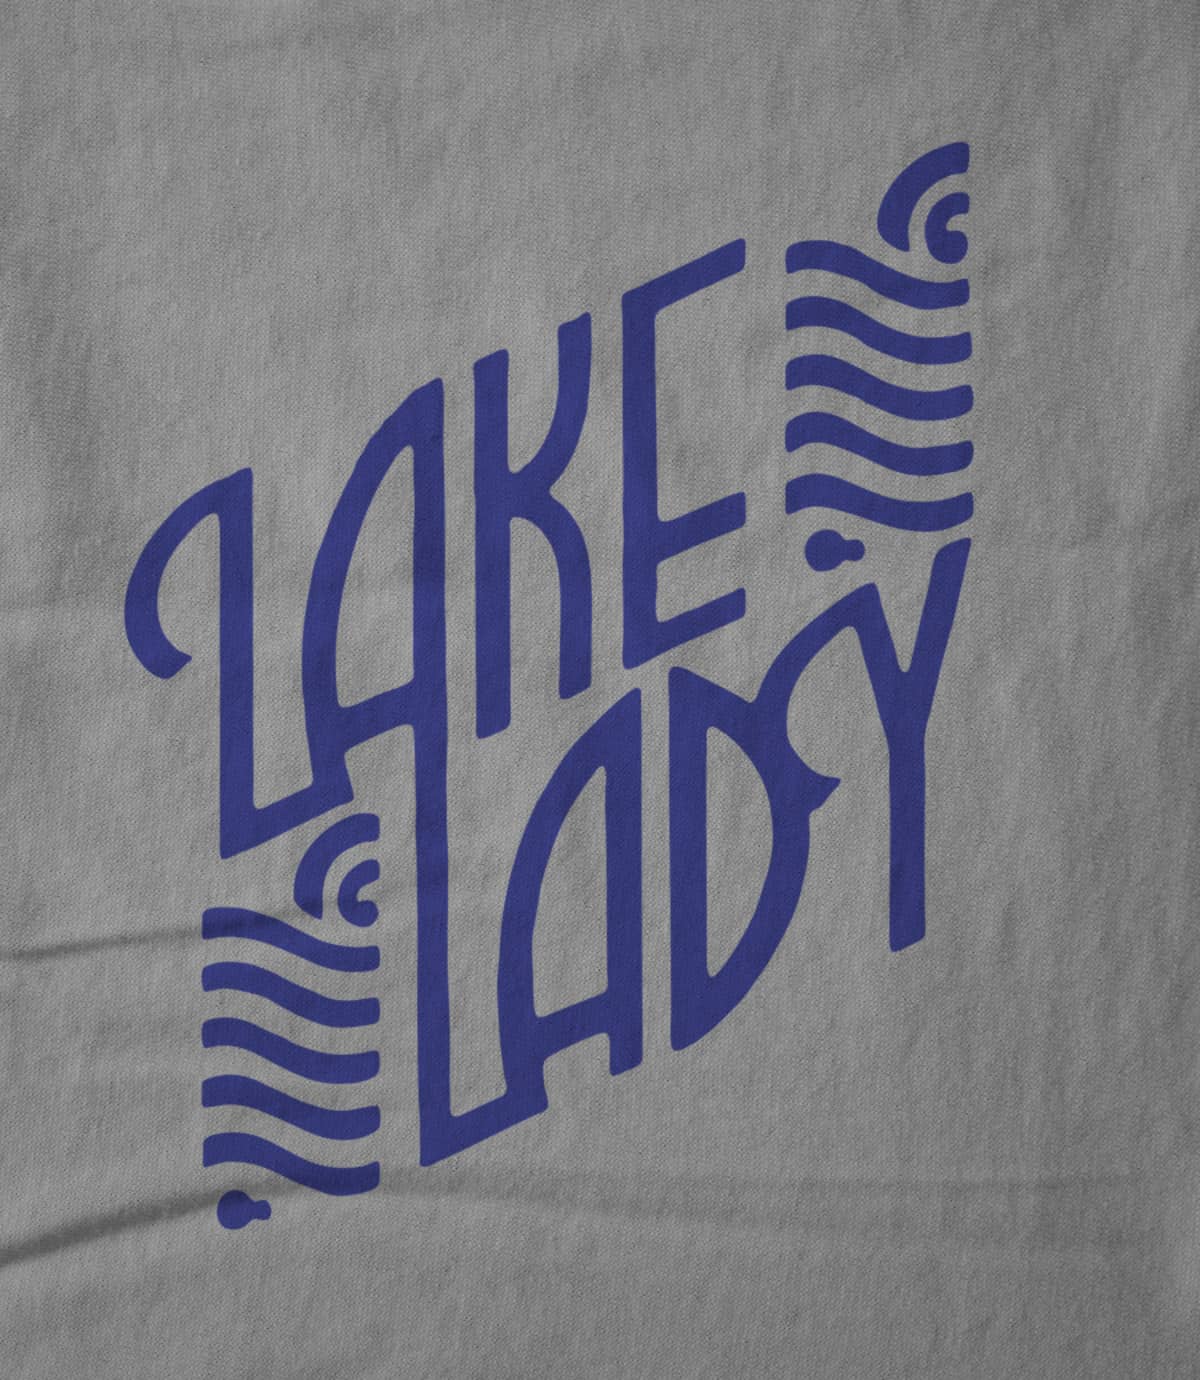 Lake Lady